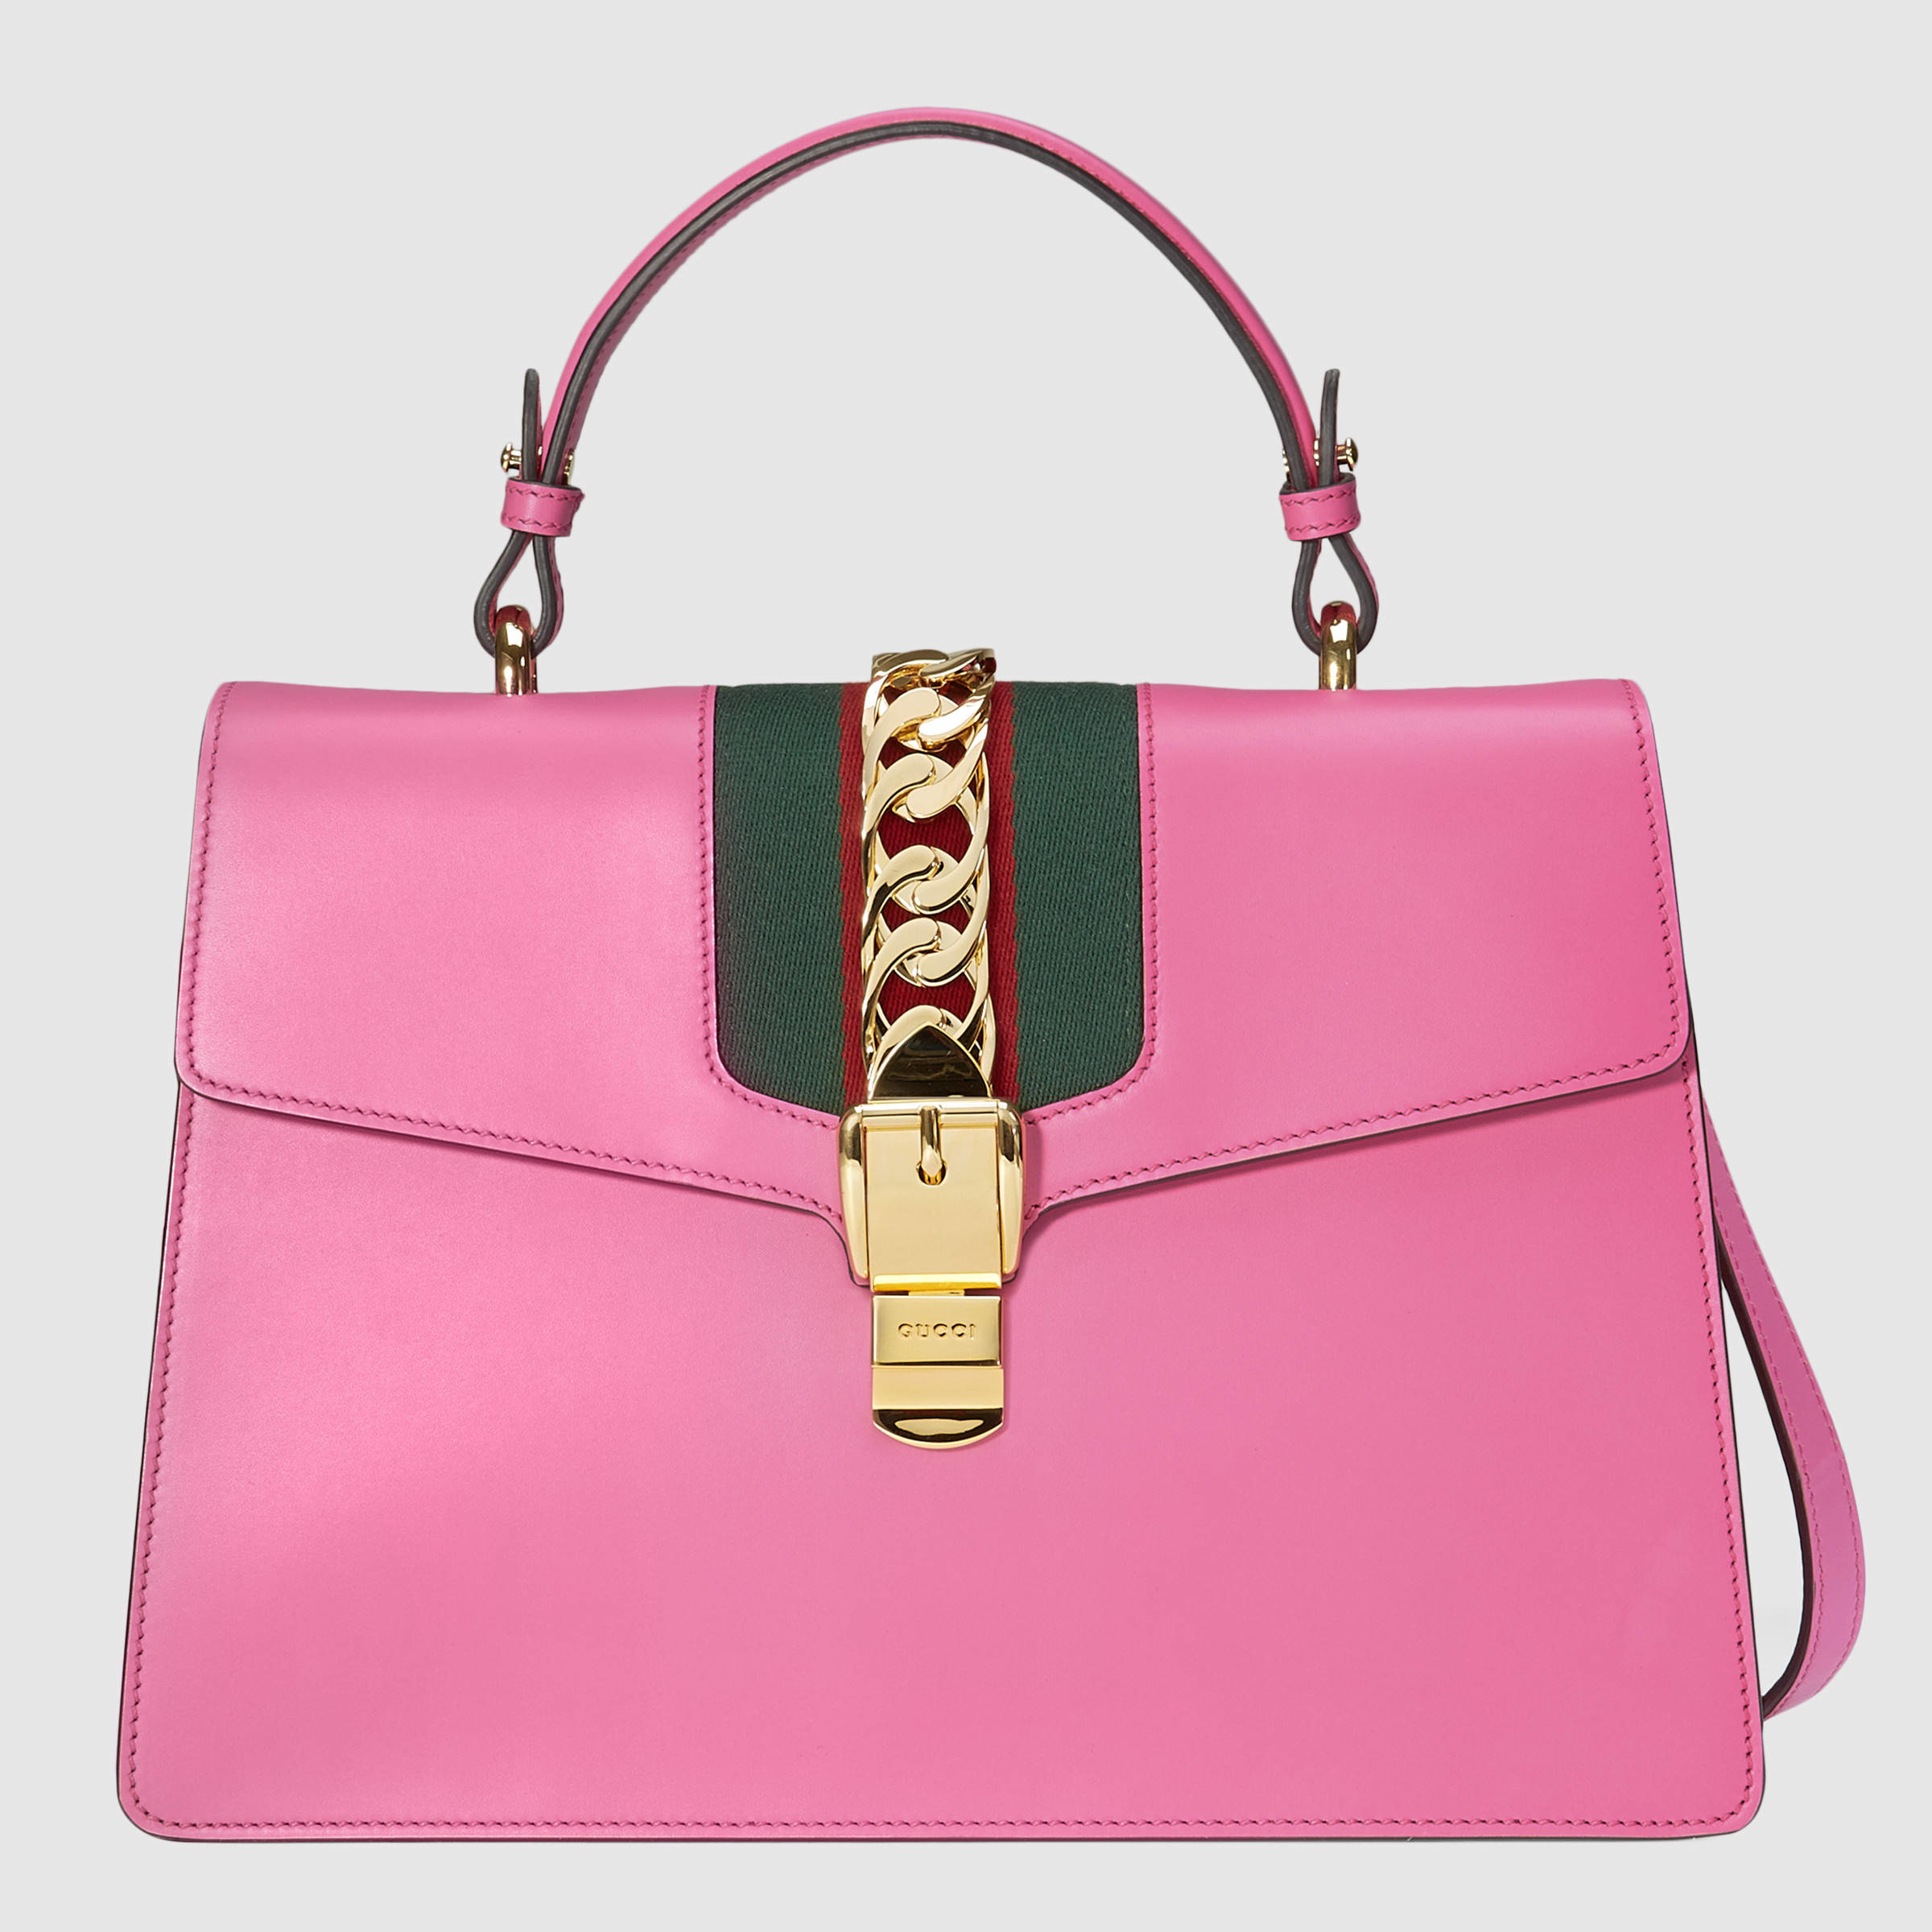 Lyst - Gucci Sylvie Medium Shoulder Bag in Pink